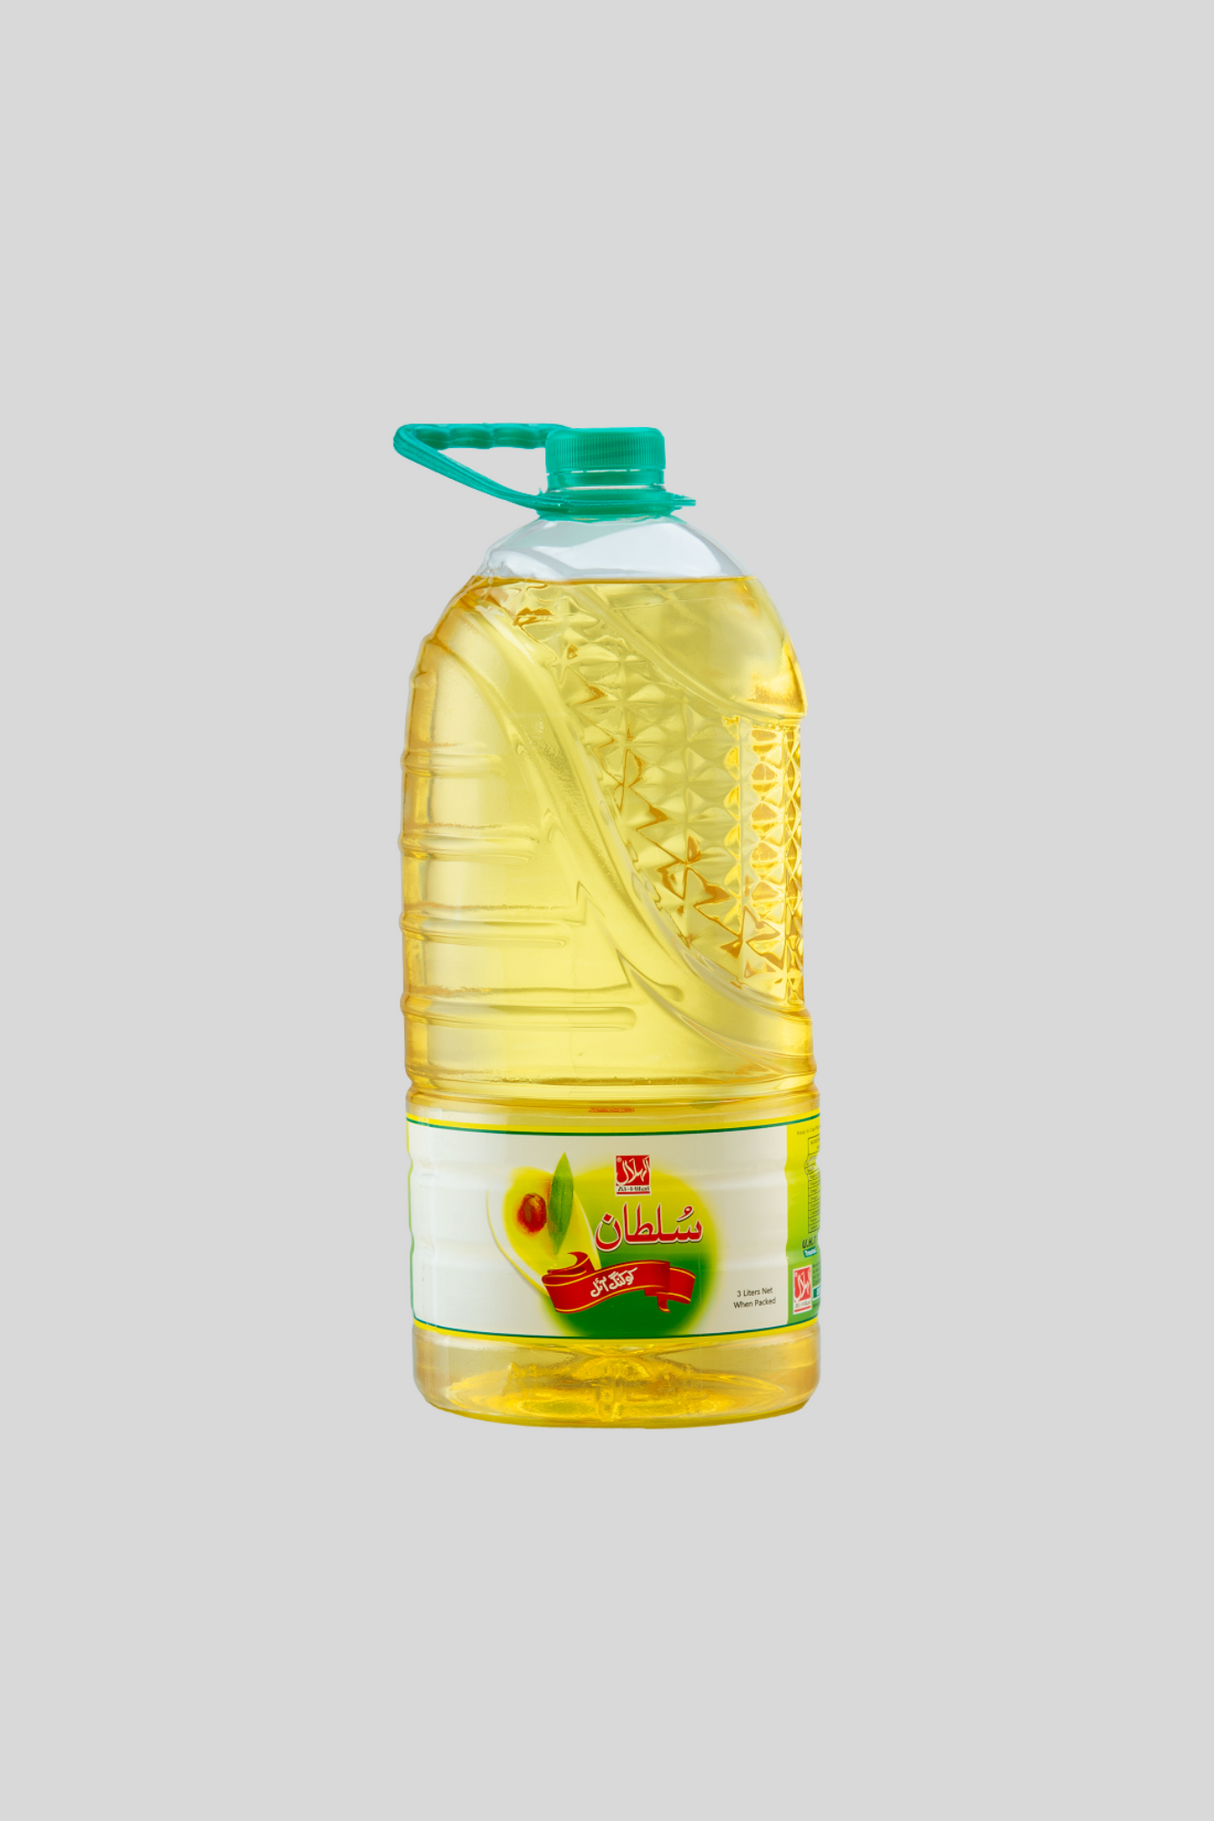 sultan cooking oil 3l bottle